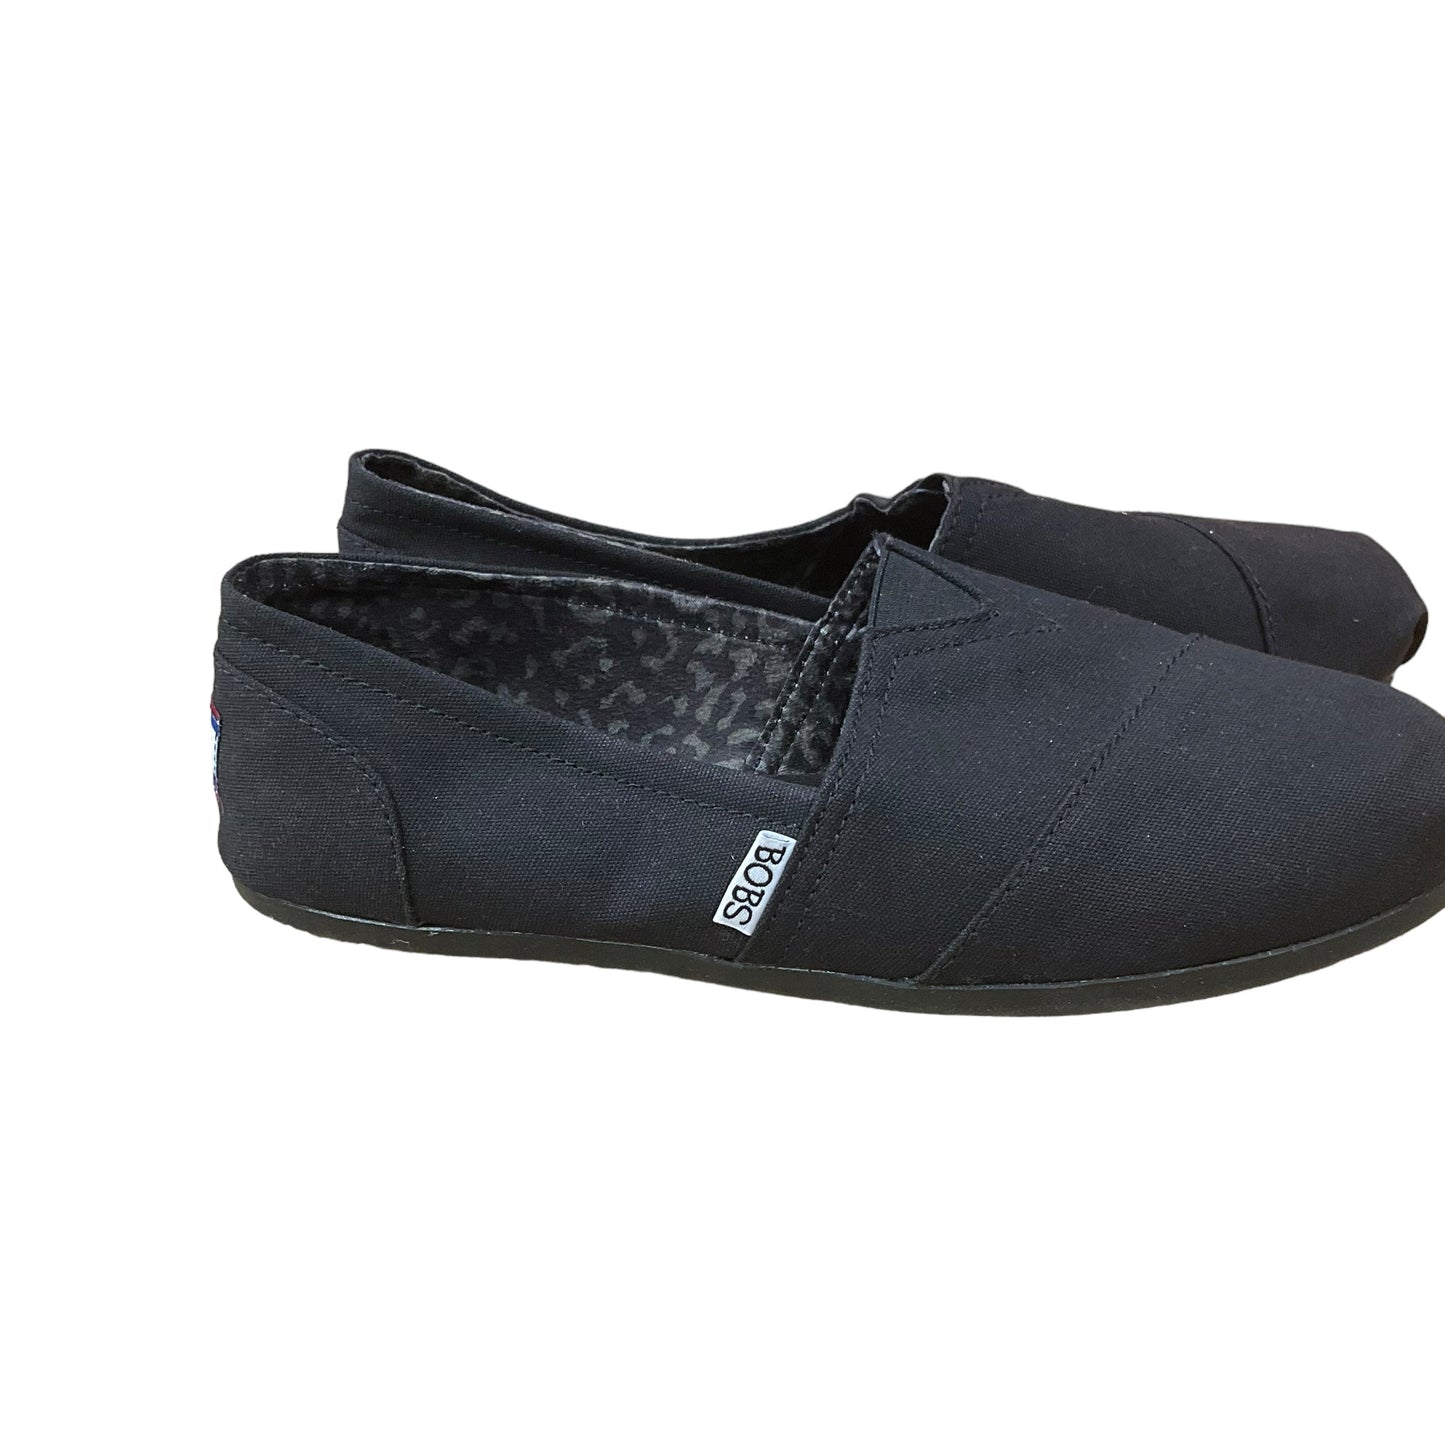 Black Shoes Flats Bobs, Size 8